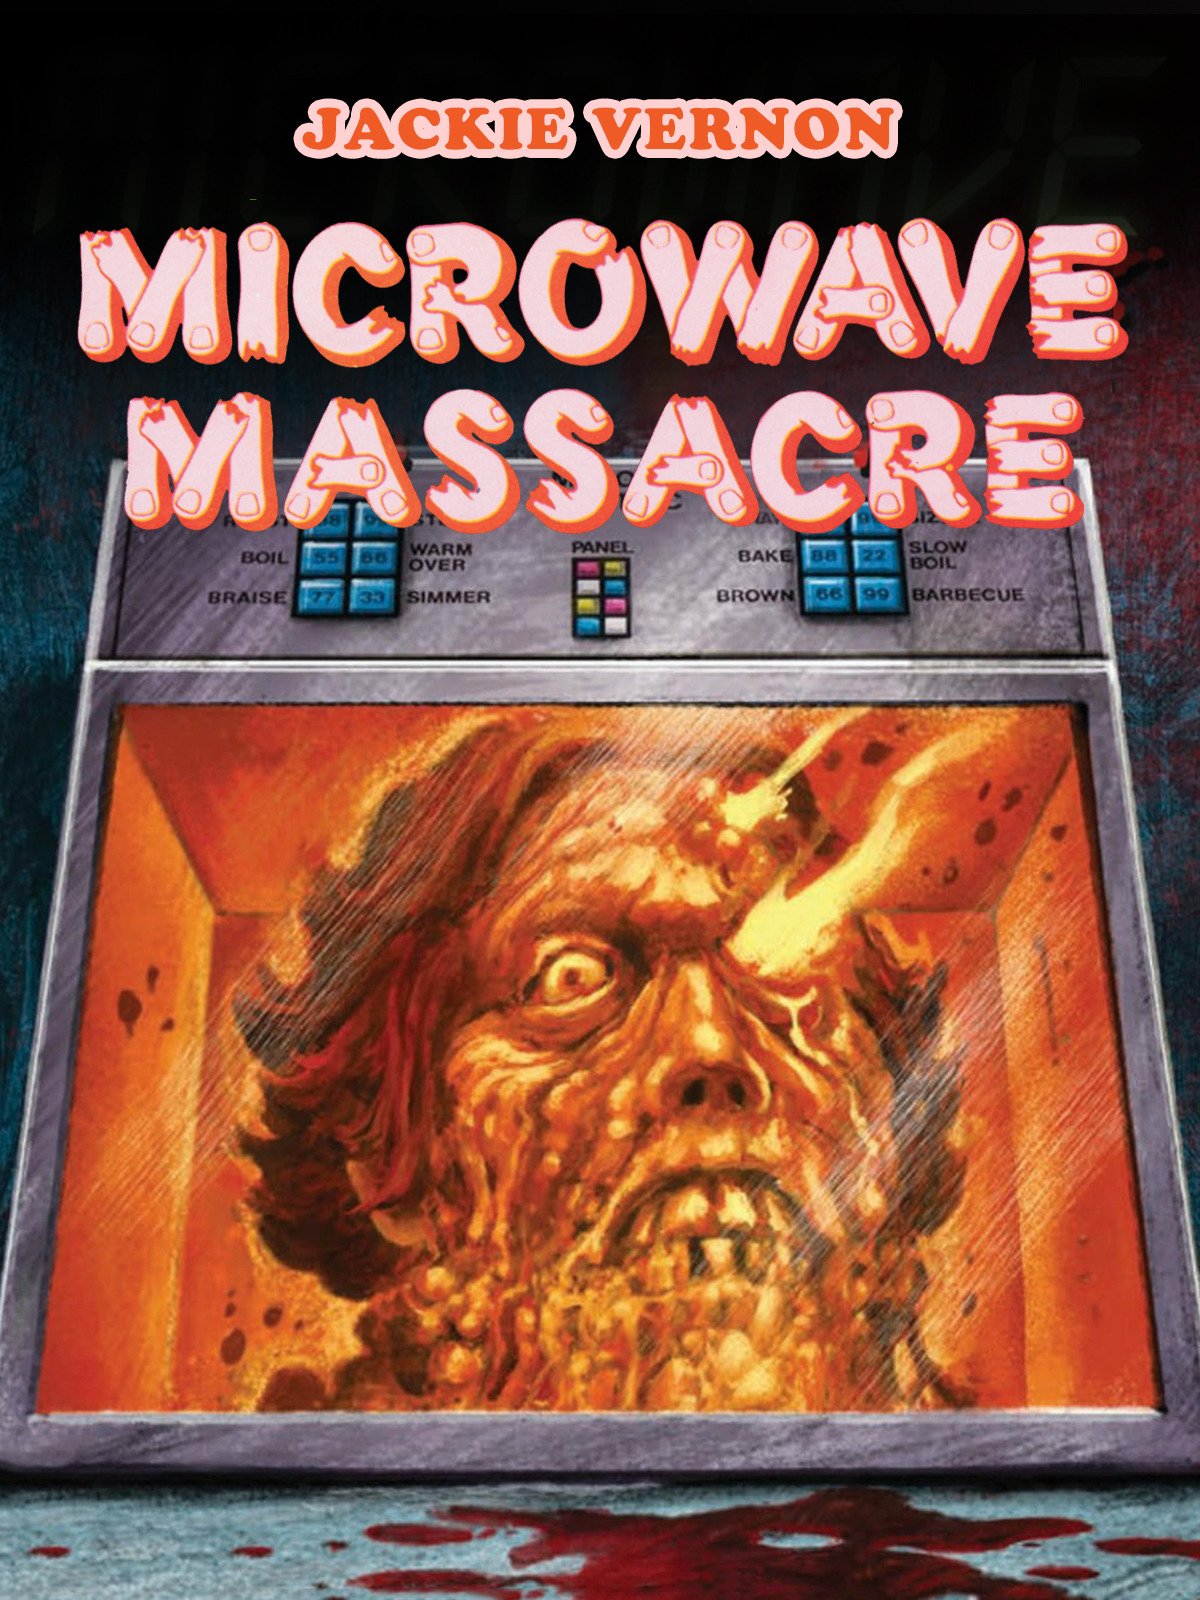   - Microwave Massacre